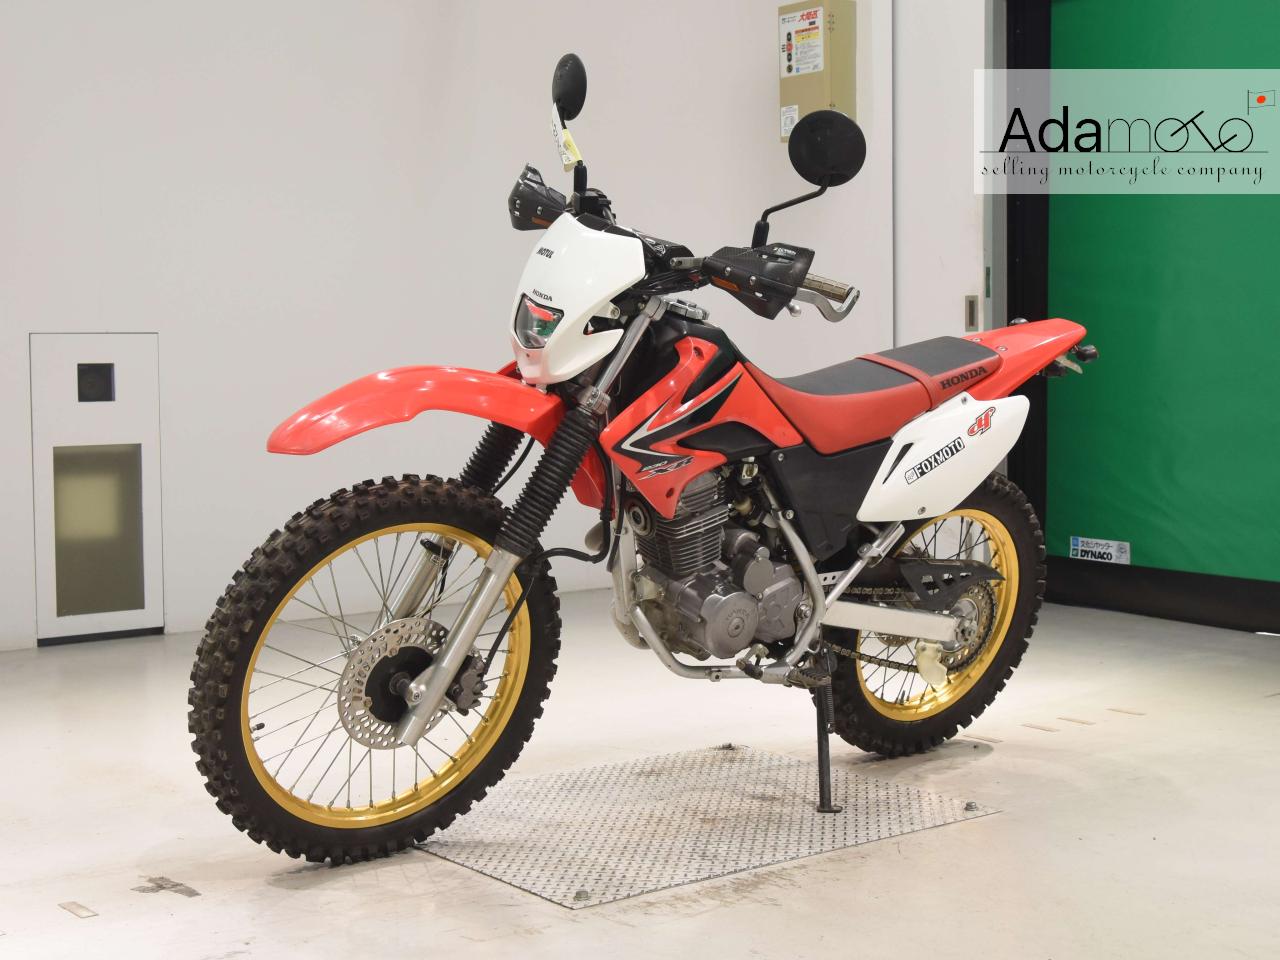 Honda XR230 - Adamoto - Motorcycles from Japan